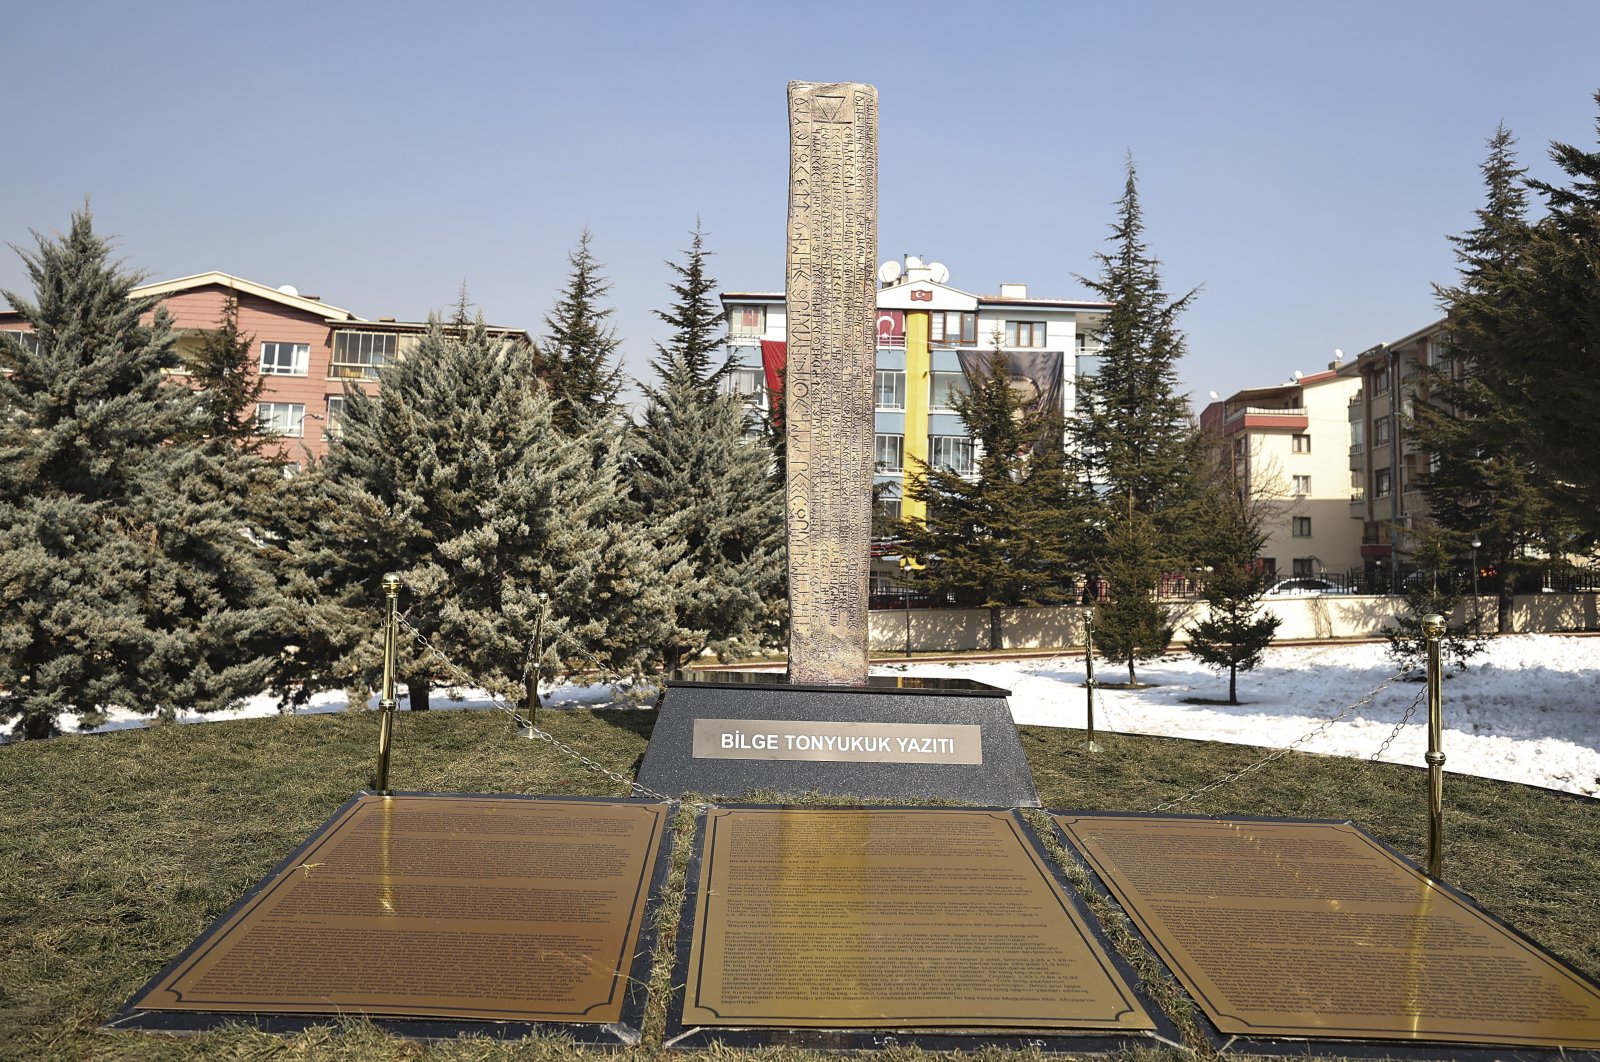 The Tonyukuk inscriptions monument at Turkic World Tonyukuk Park in the Altındağ district of the capital Ankara, Turkey, Feb. 22, 2021. (AA PHOTO)